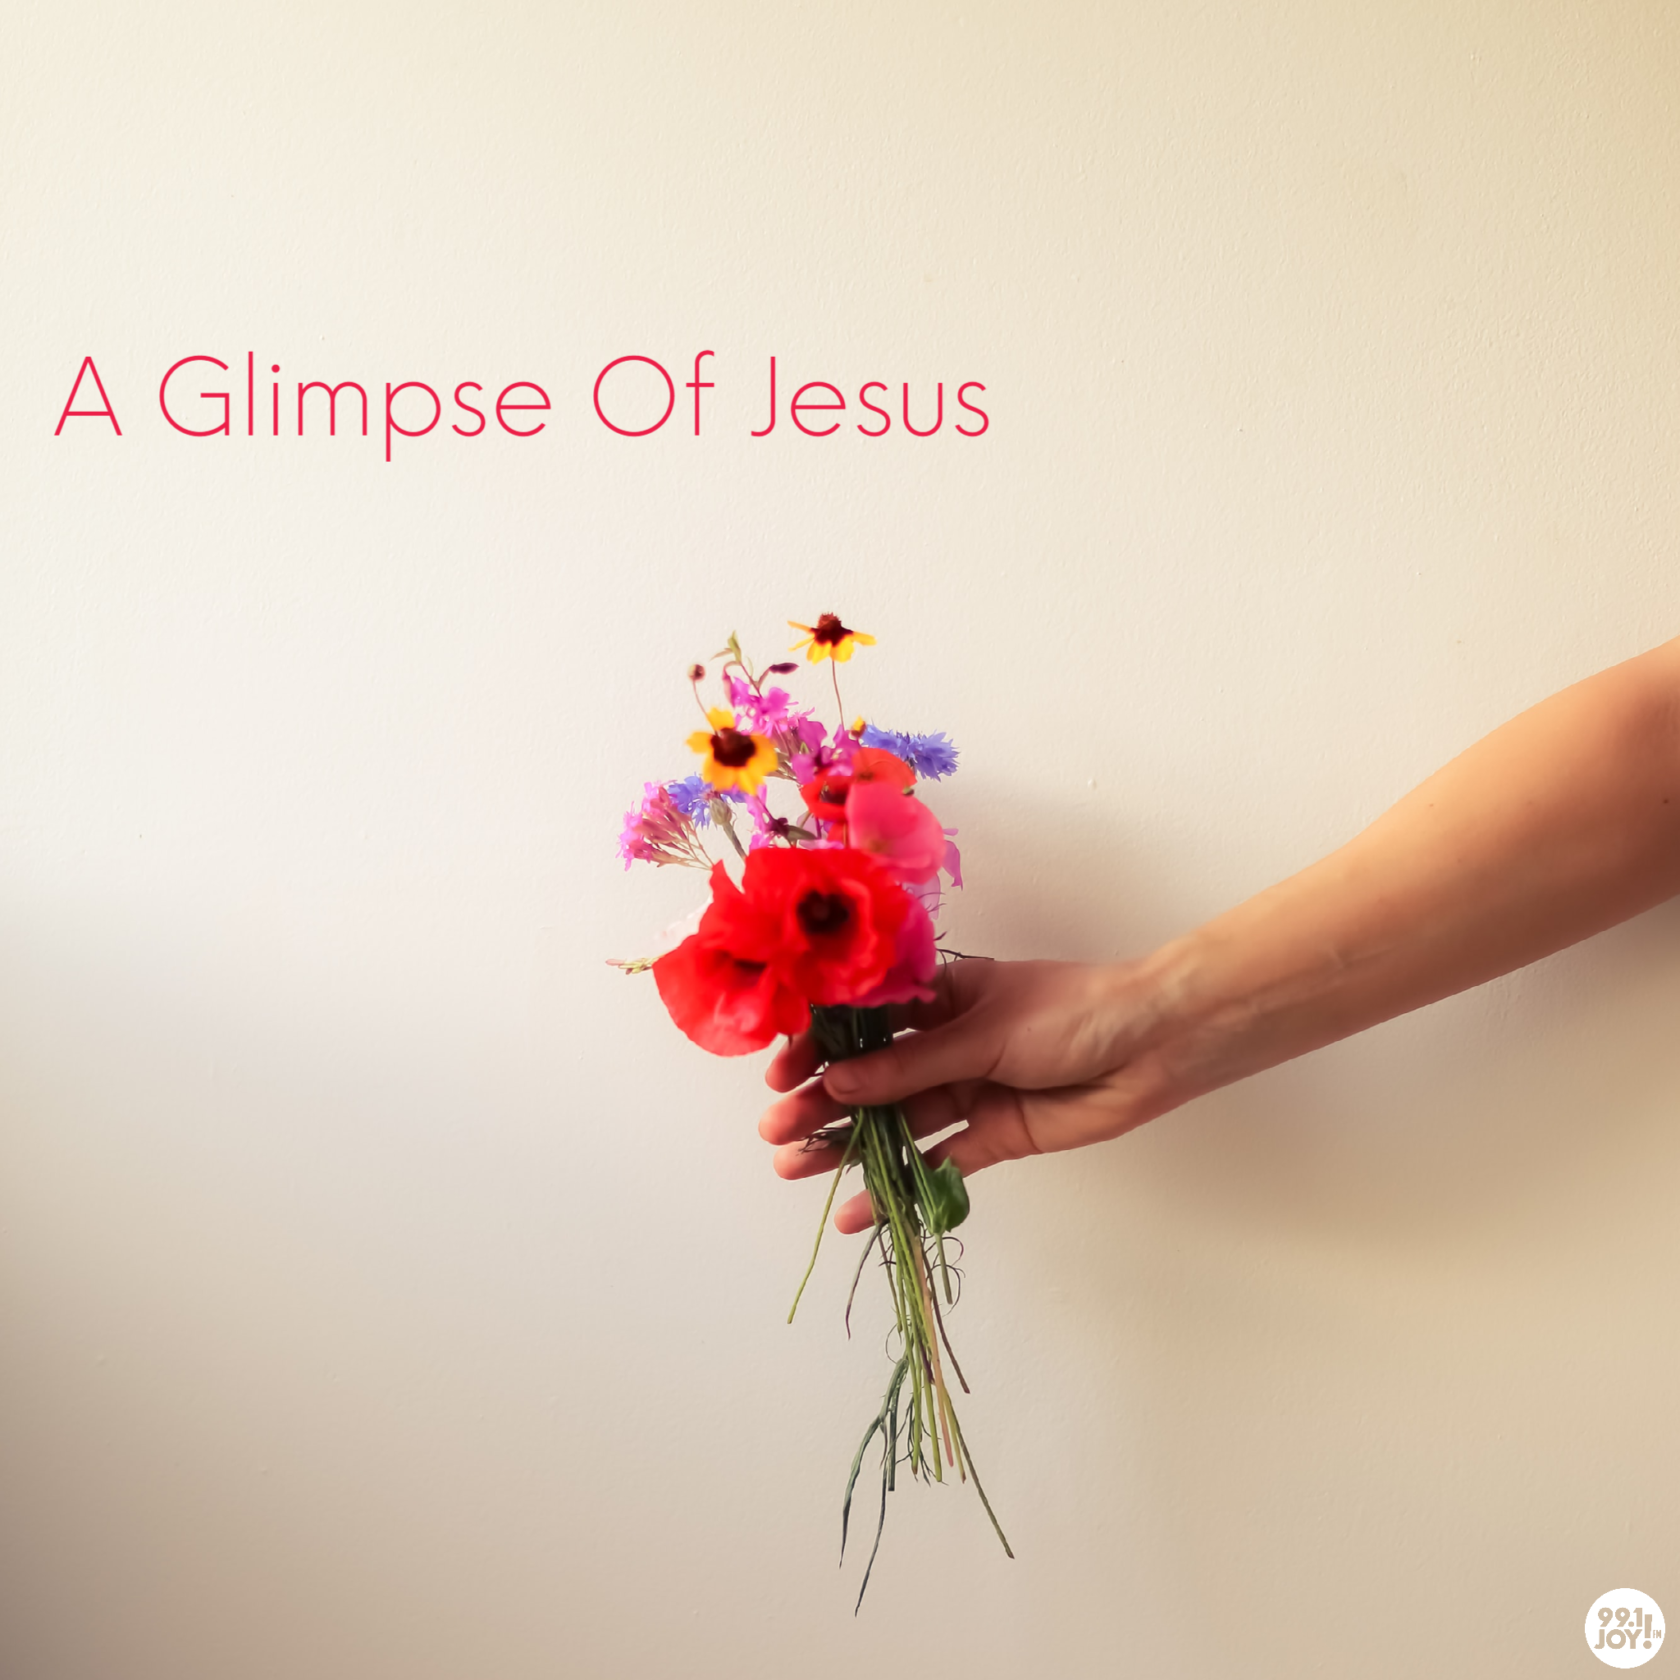 A Glimpse Of Jesus